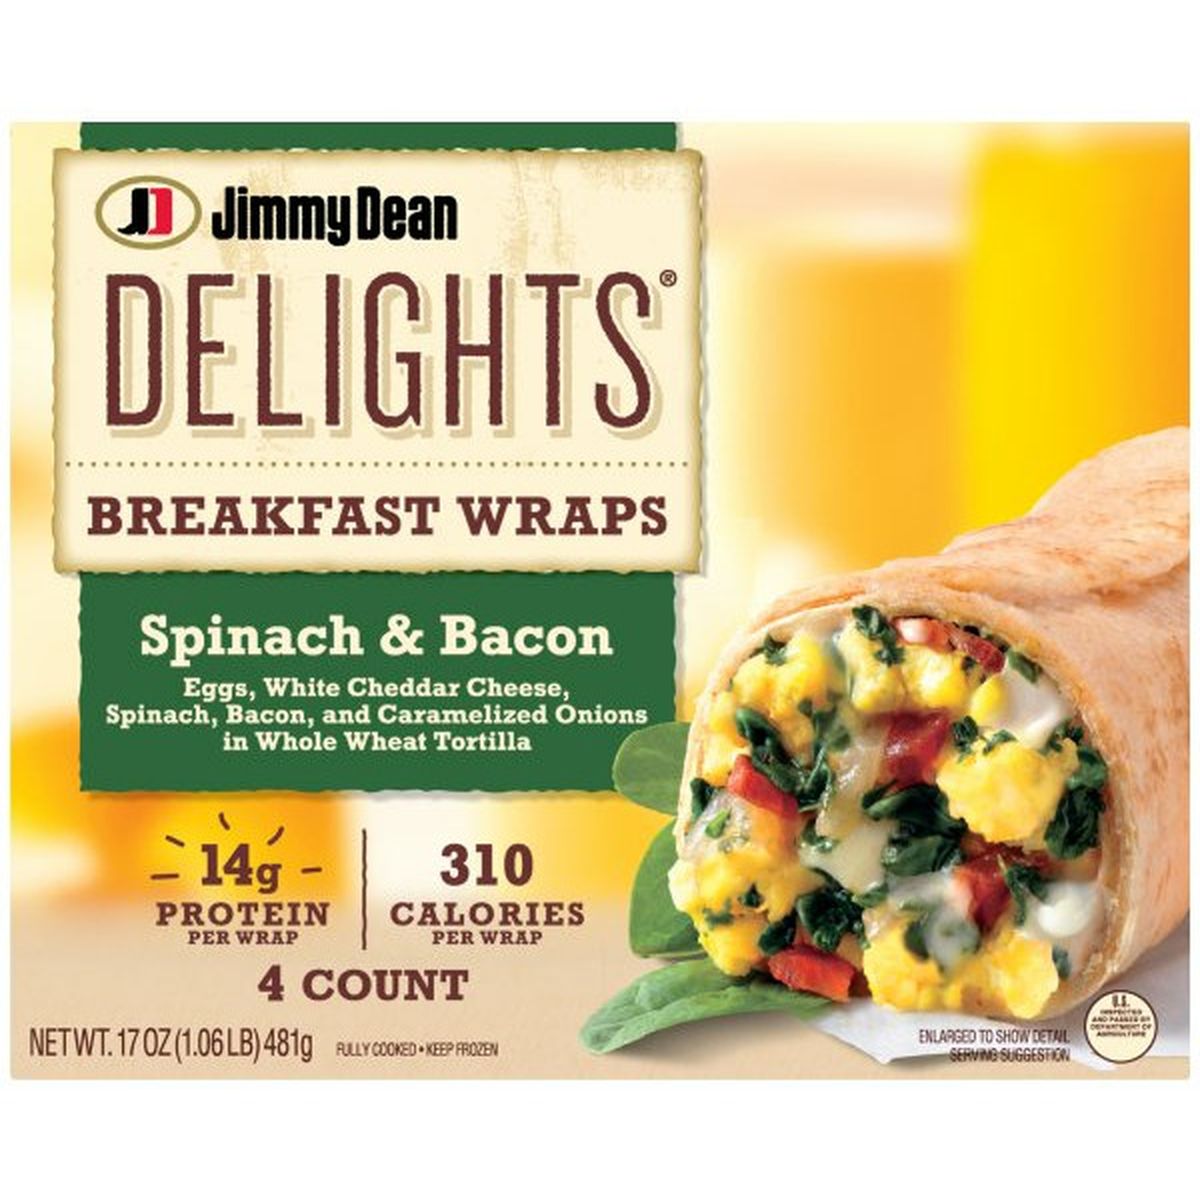 Calories in Jimmy Dean Delights Jimmy Dean Delights Spinach & Bacon Breakfast Wraps